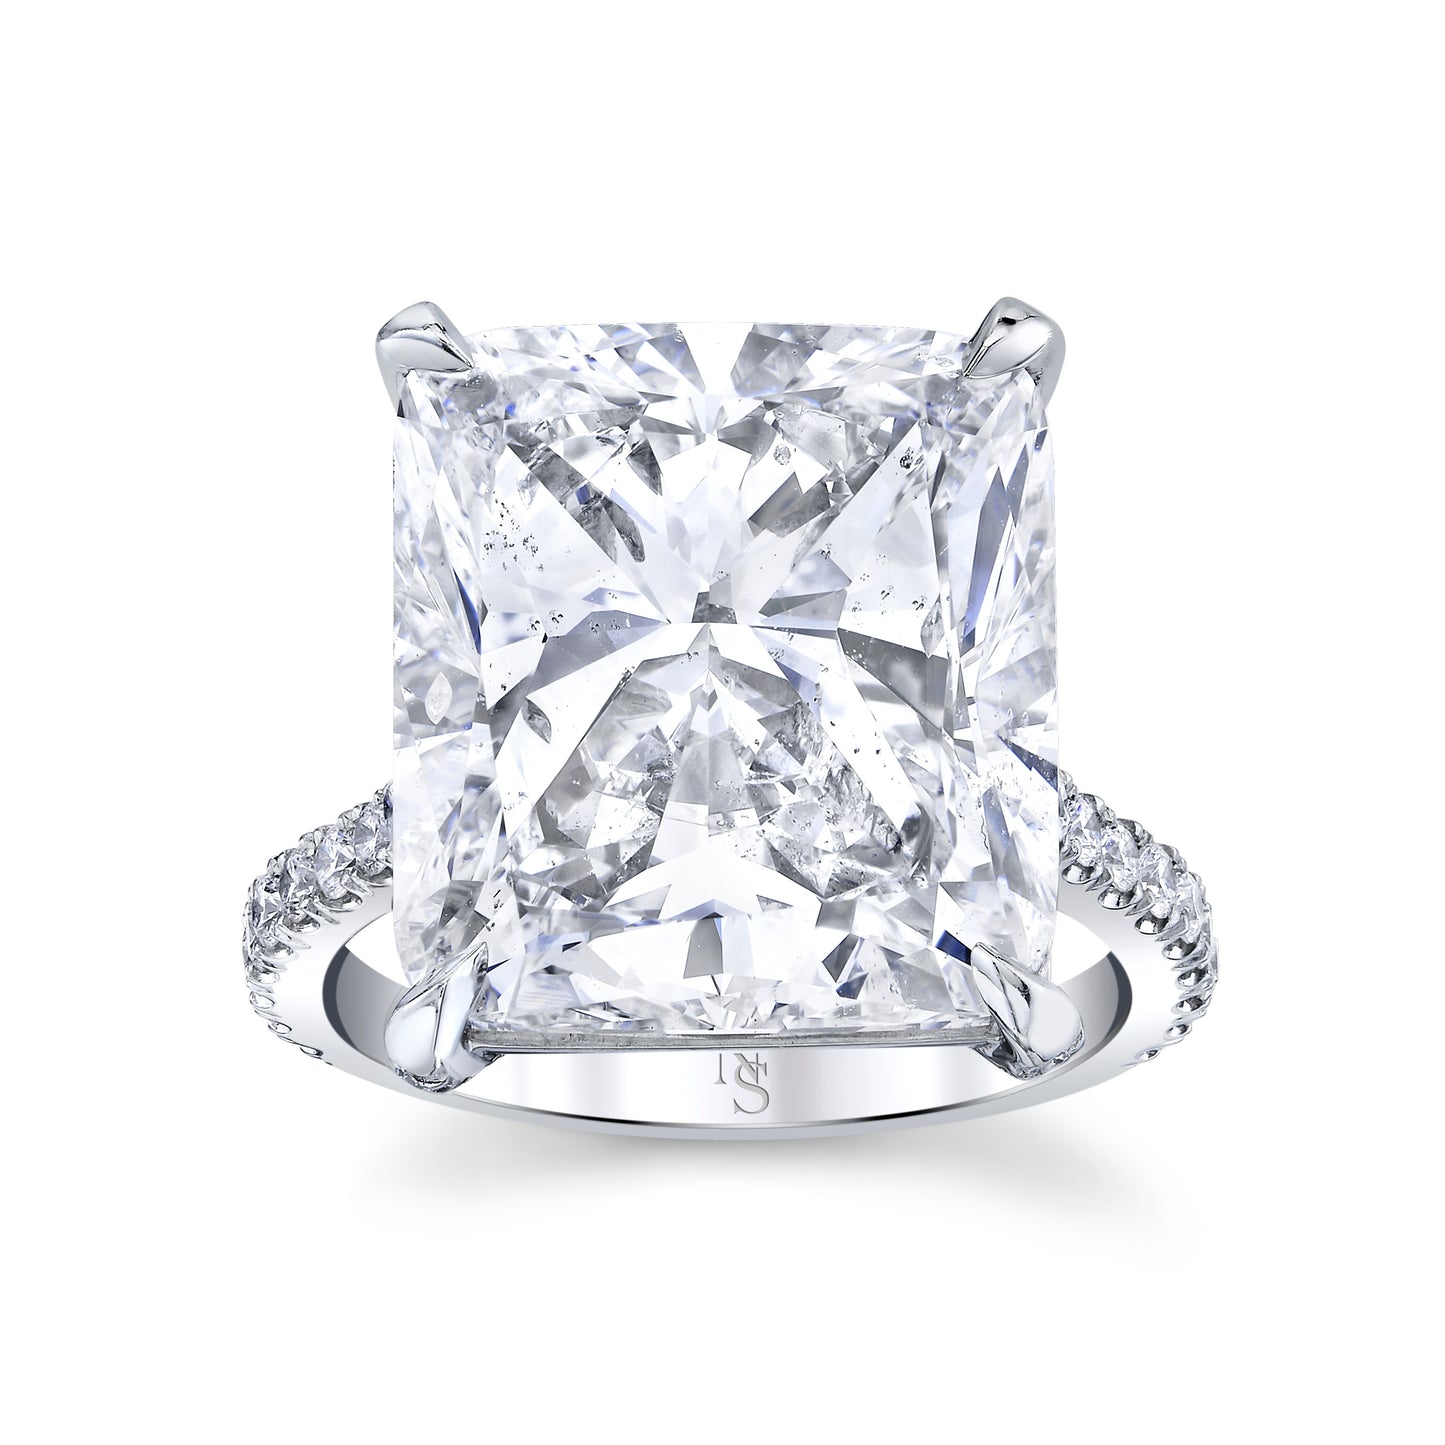 15.13 Carat Radiant Cut Diamond Ring